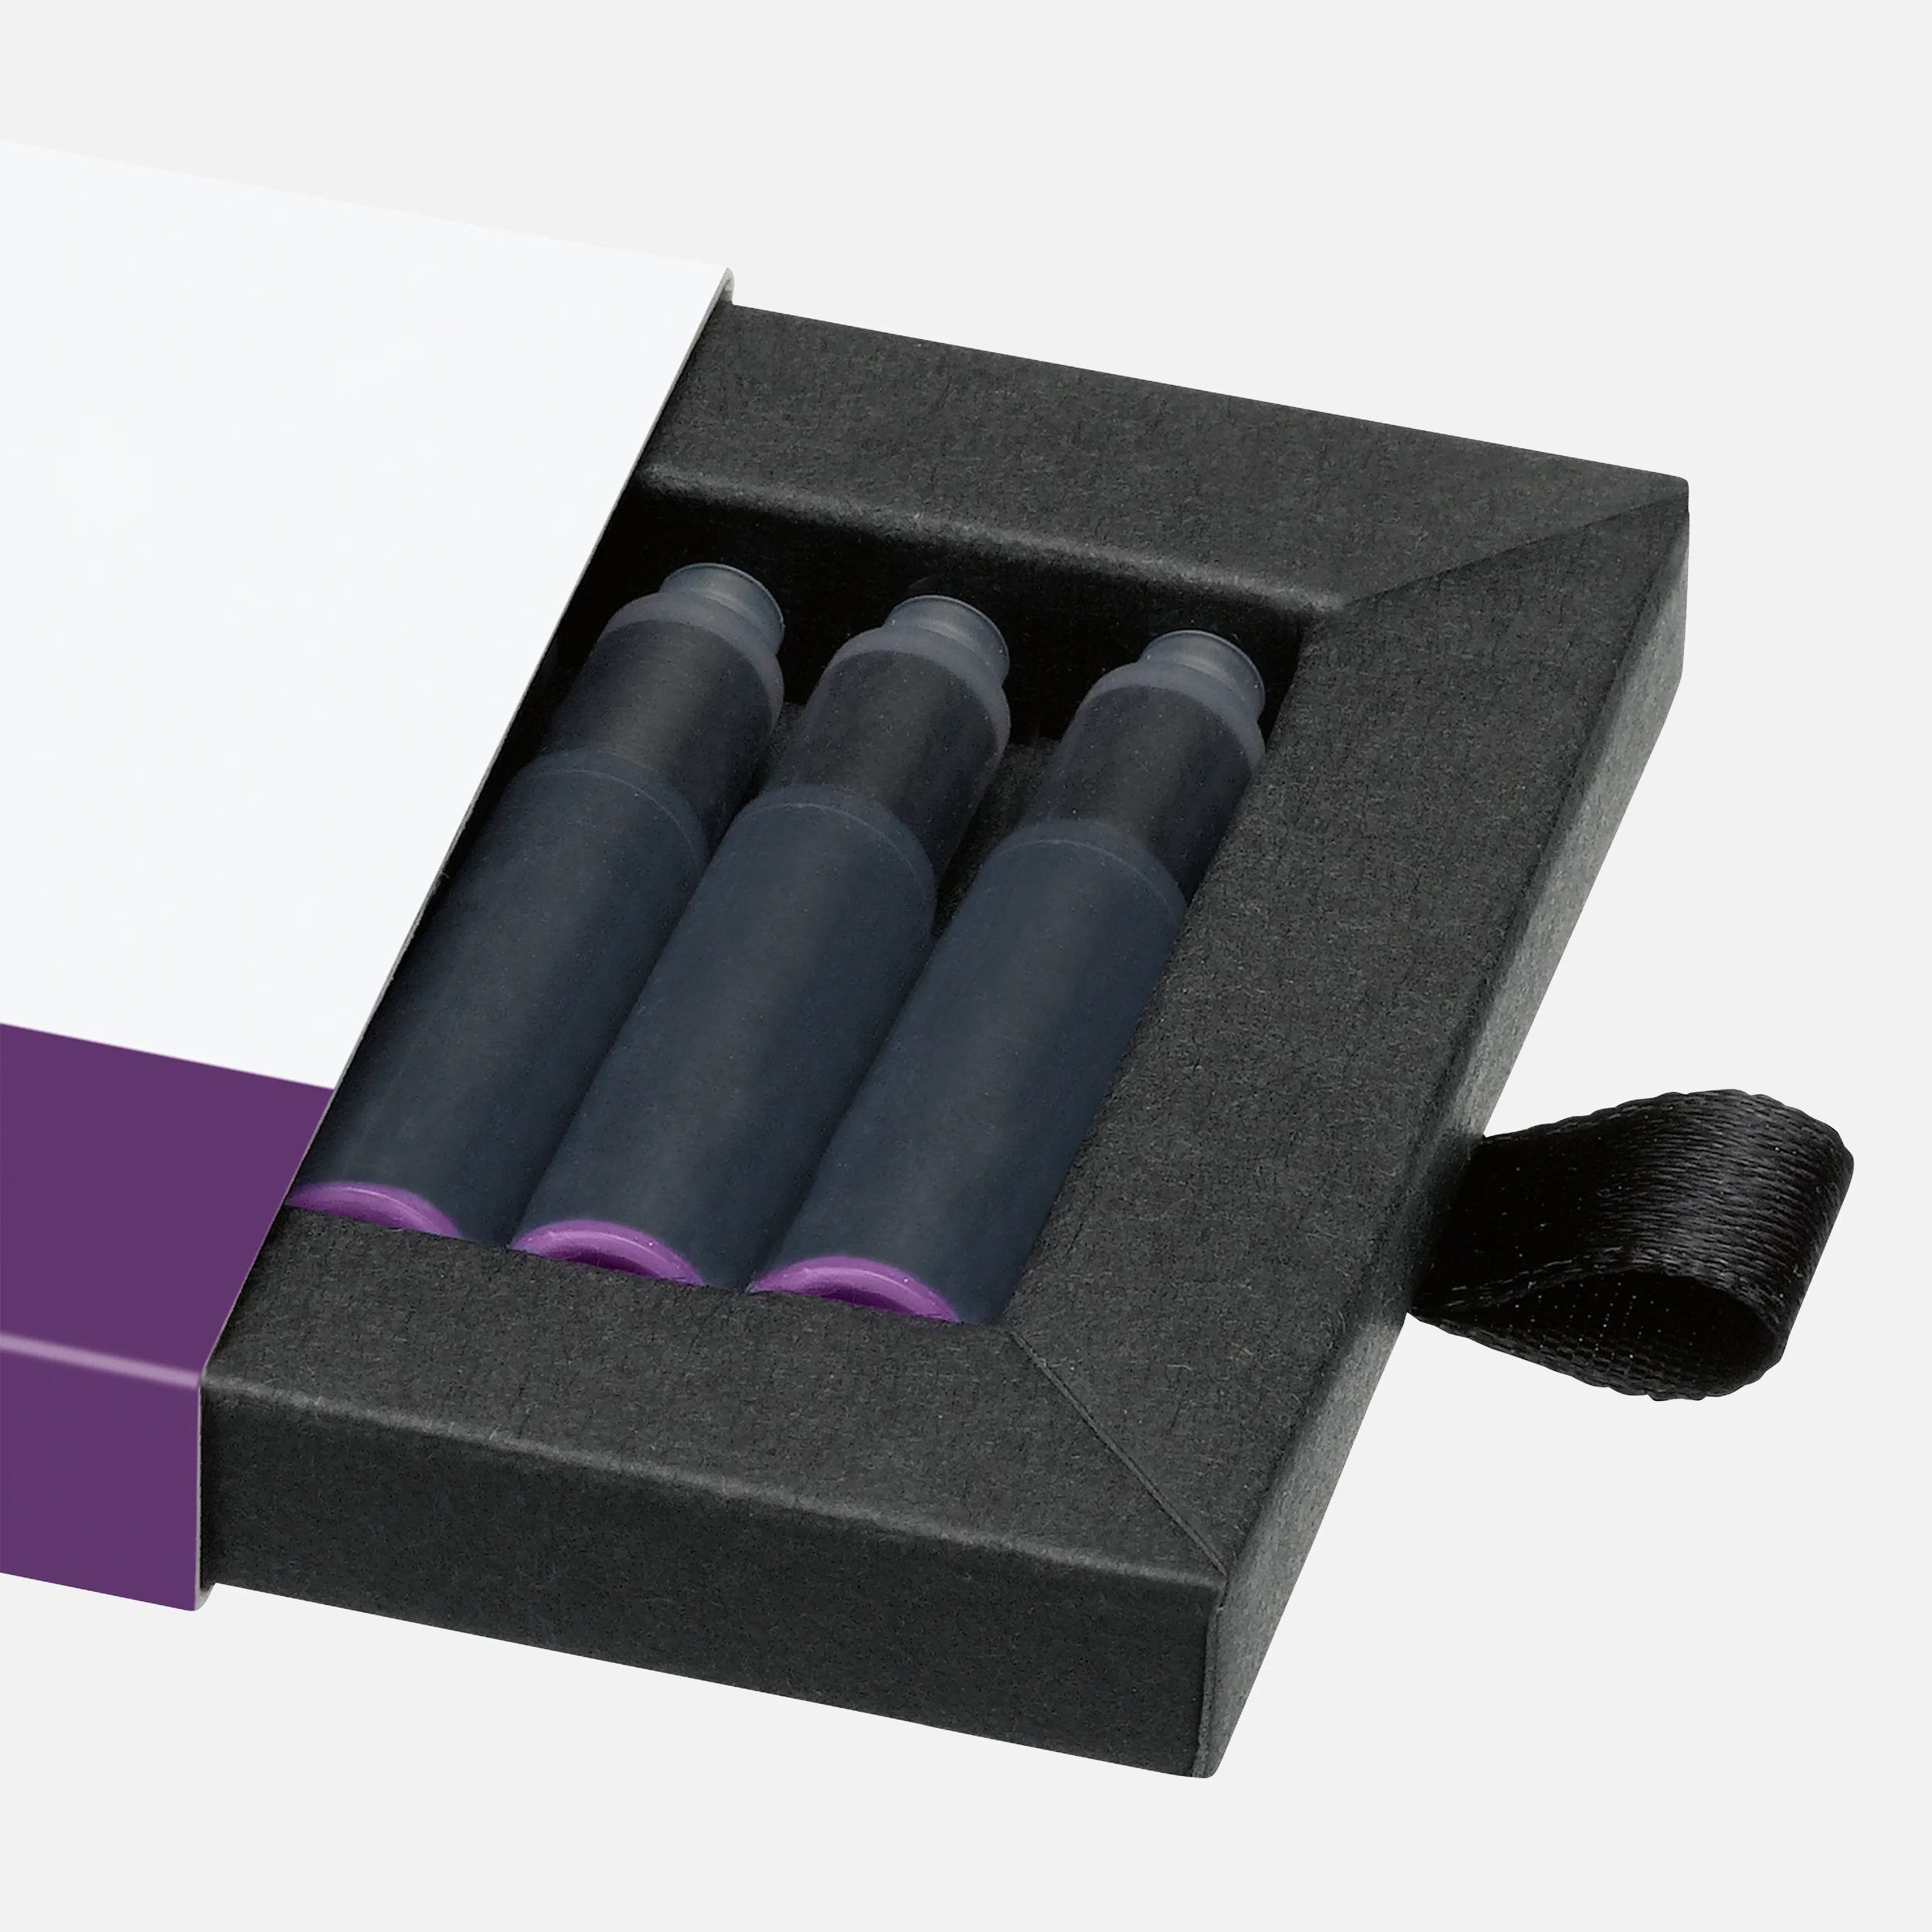 Montblanc - Tintenpatronen - Amethyst Purple